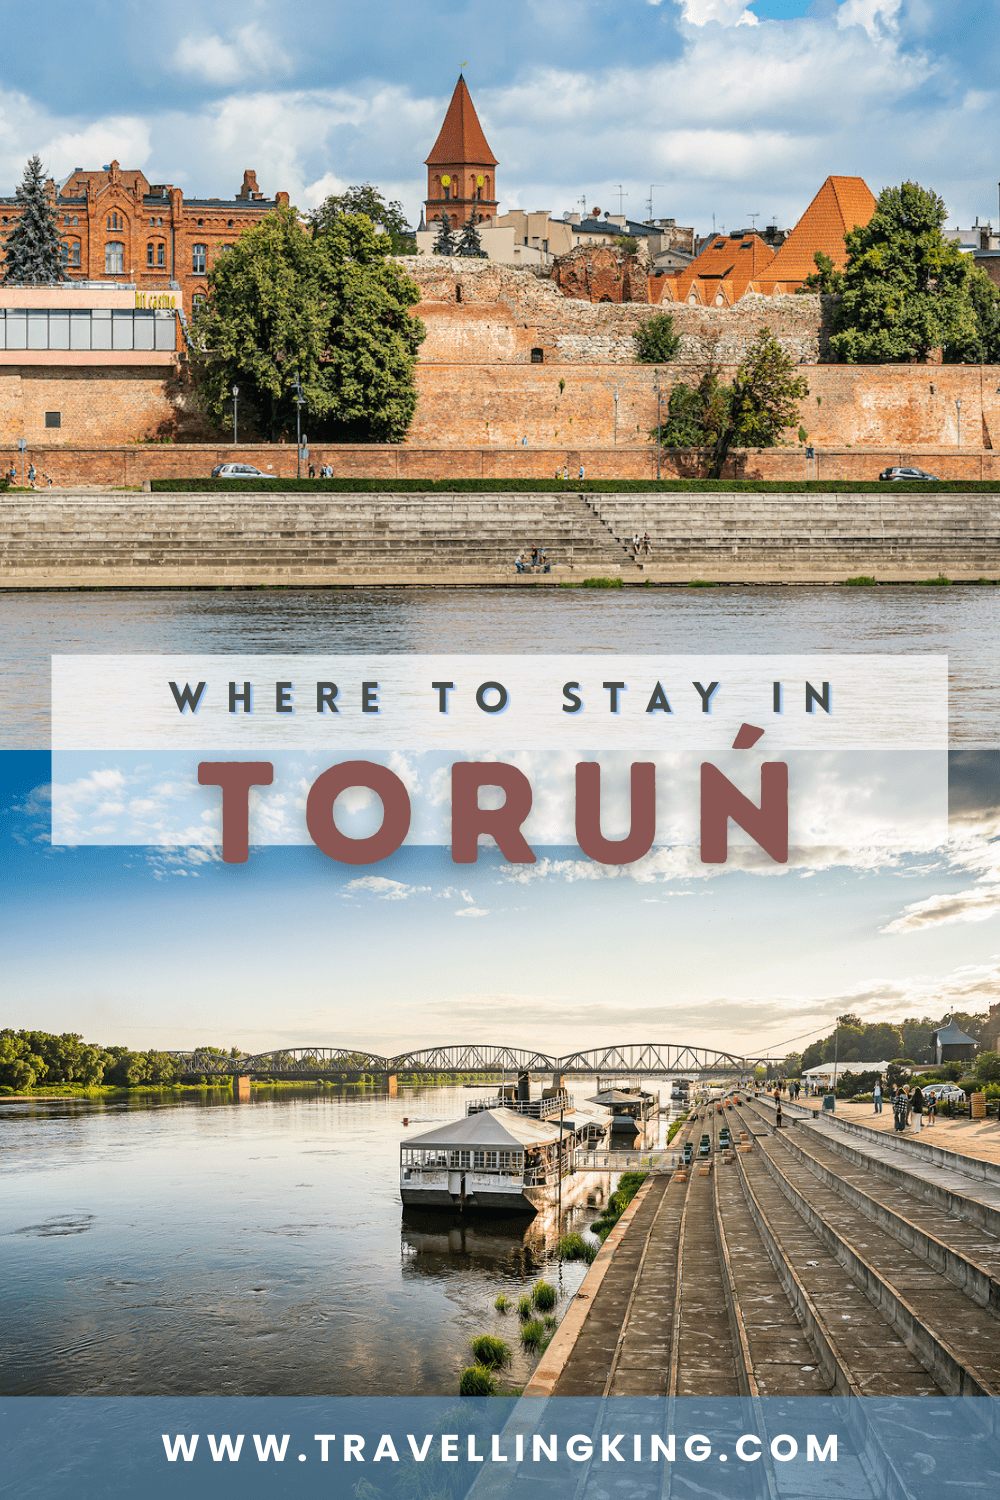 Where To Stay in Torun